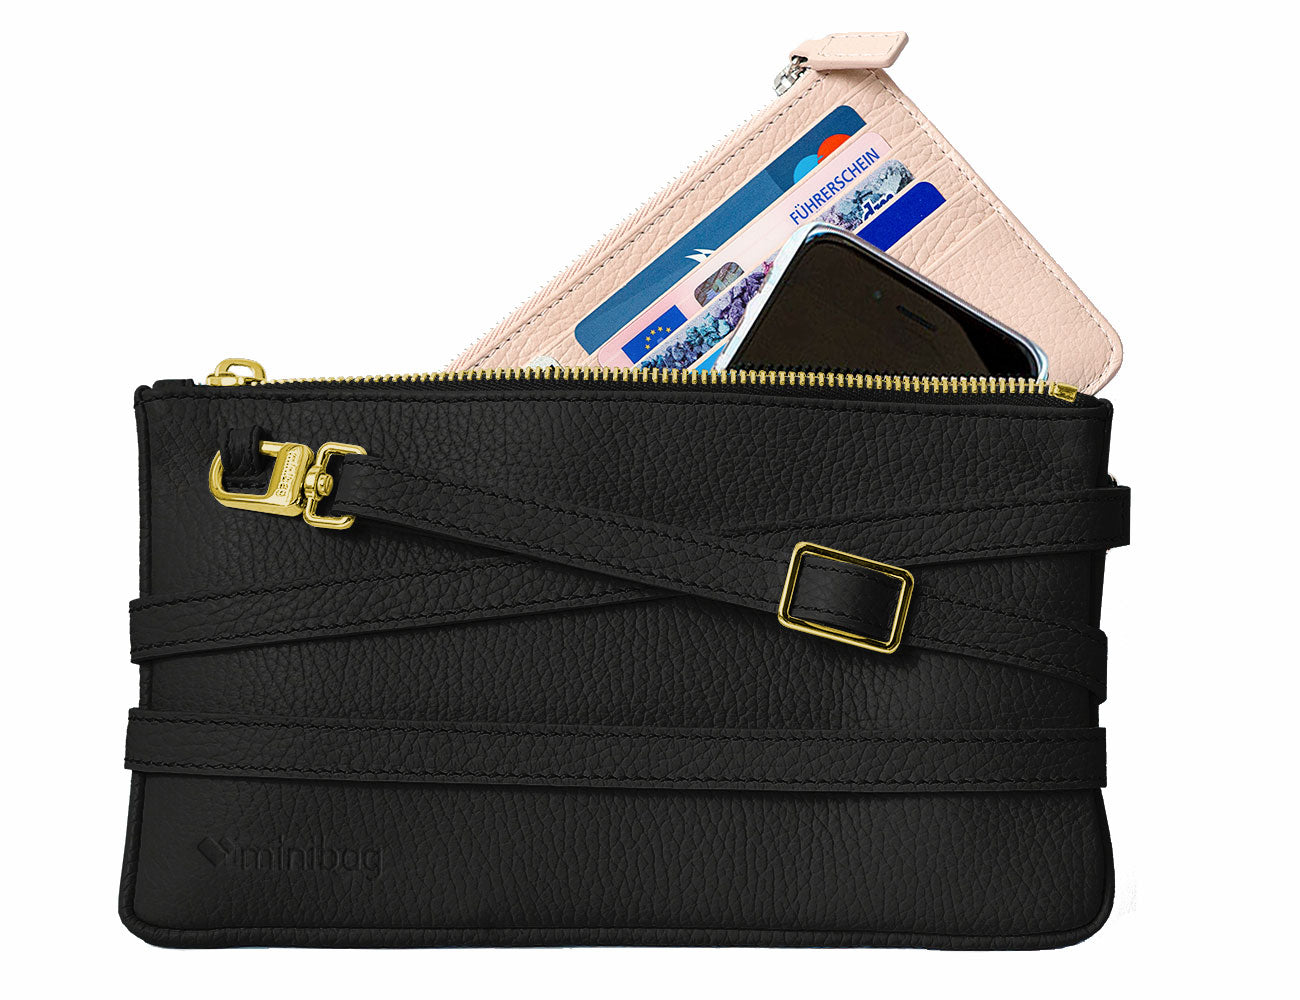 minibag black Edition GOLD, schwarze Ledertasche, minibag Wallet nude, goldener Zip, minibag schwarz